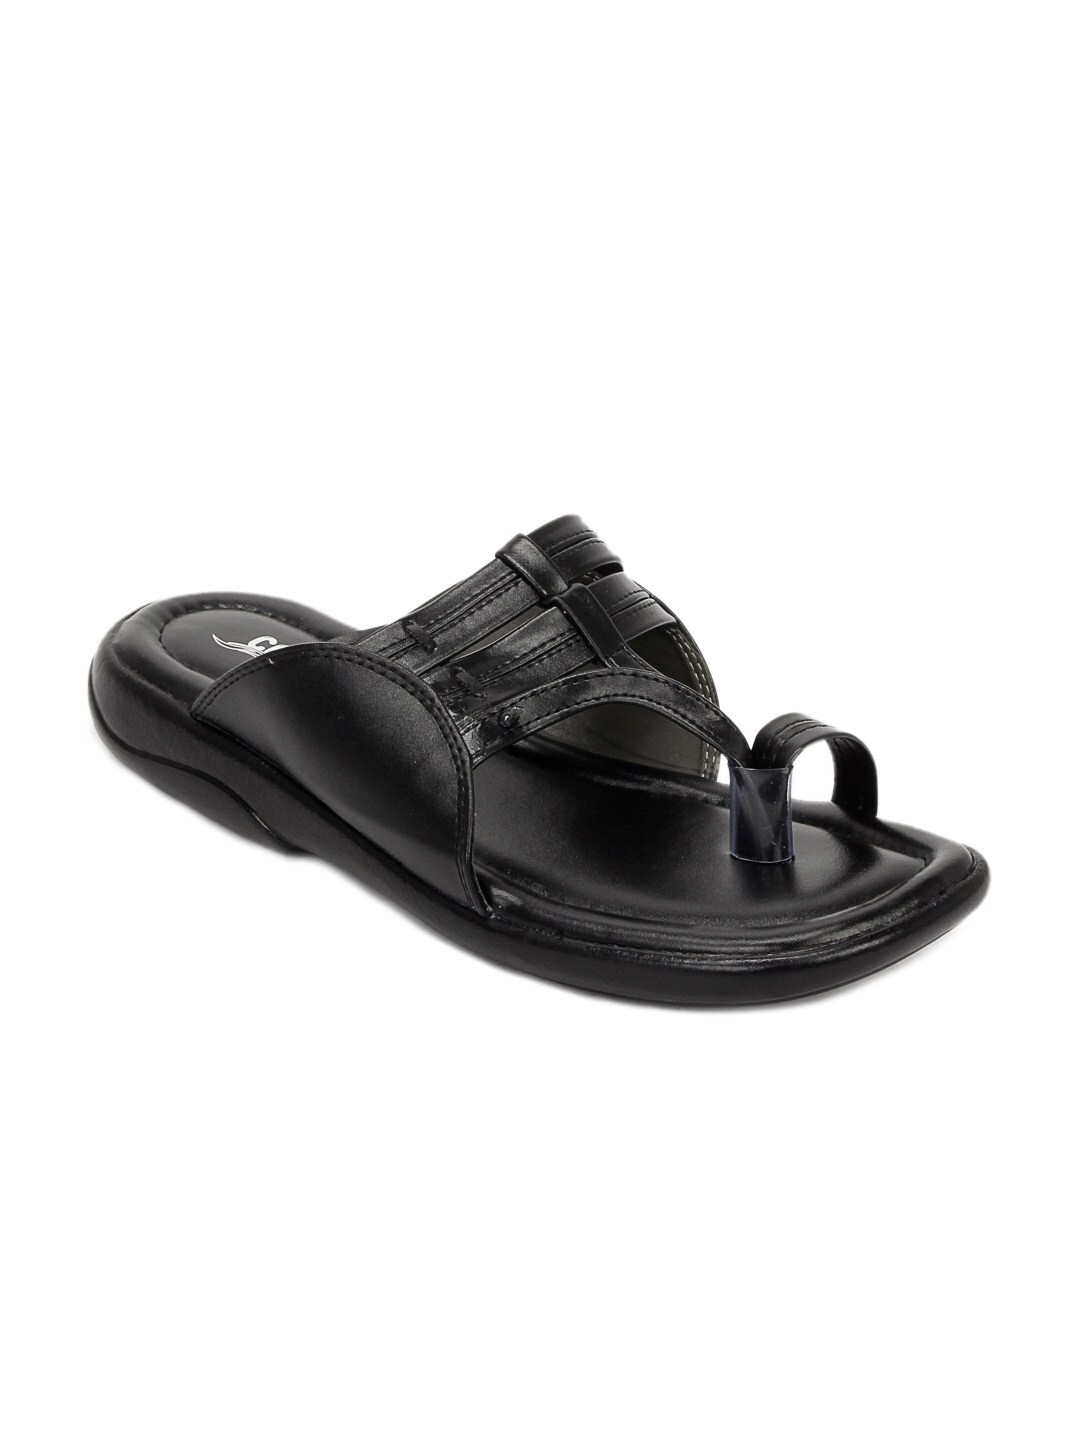 Coolers Men Black Sandals